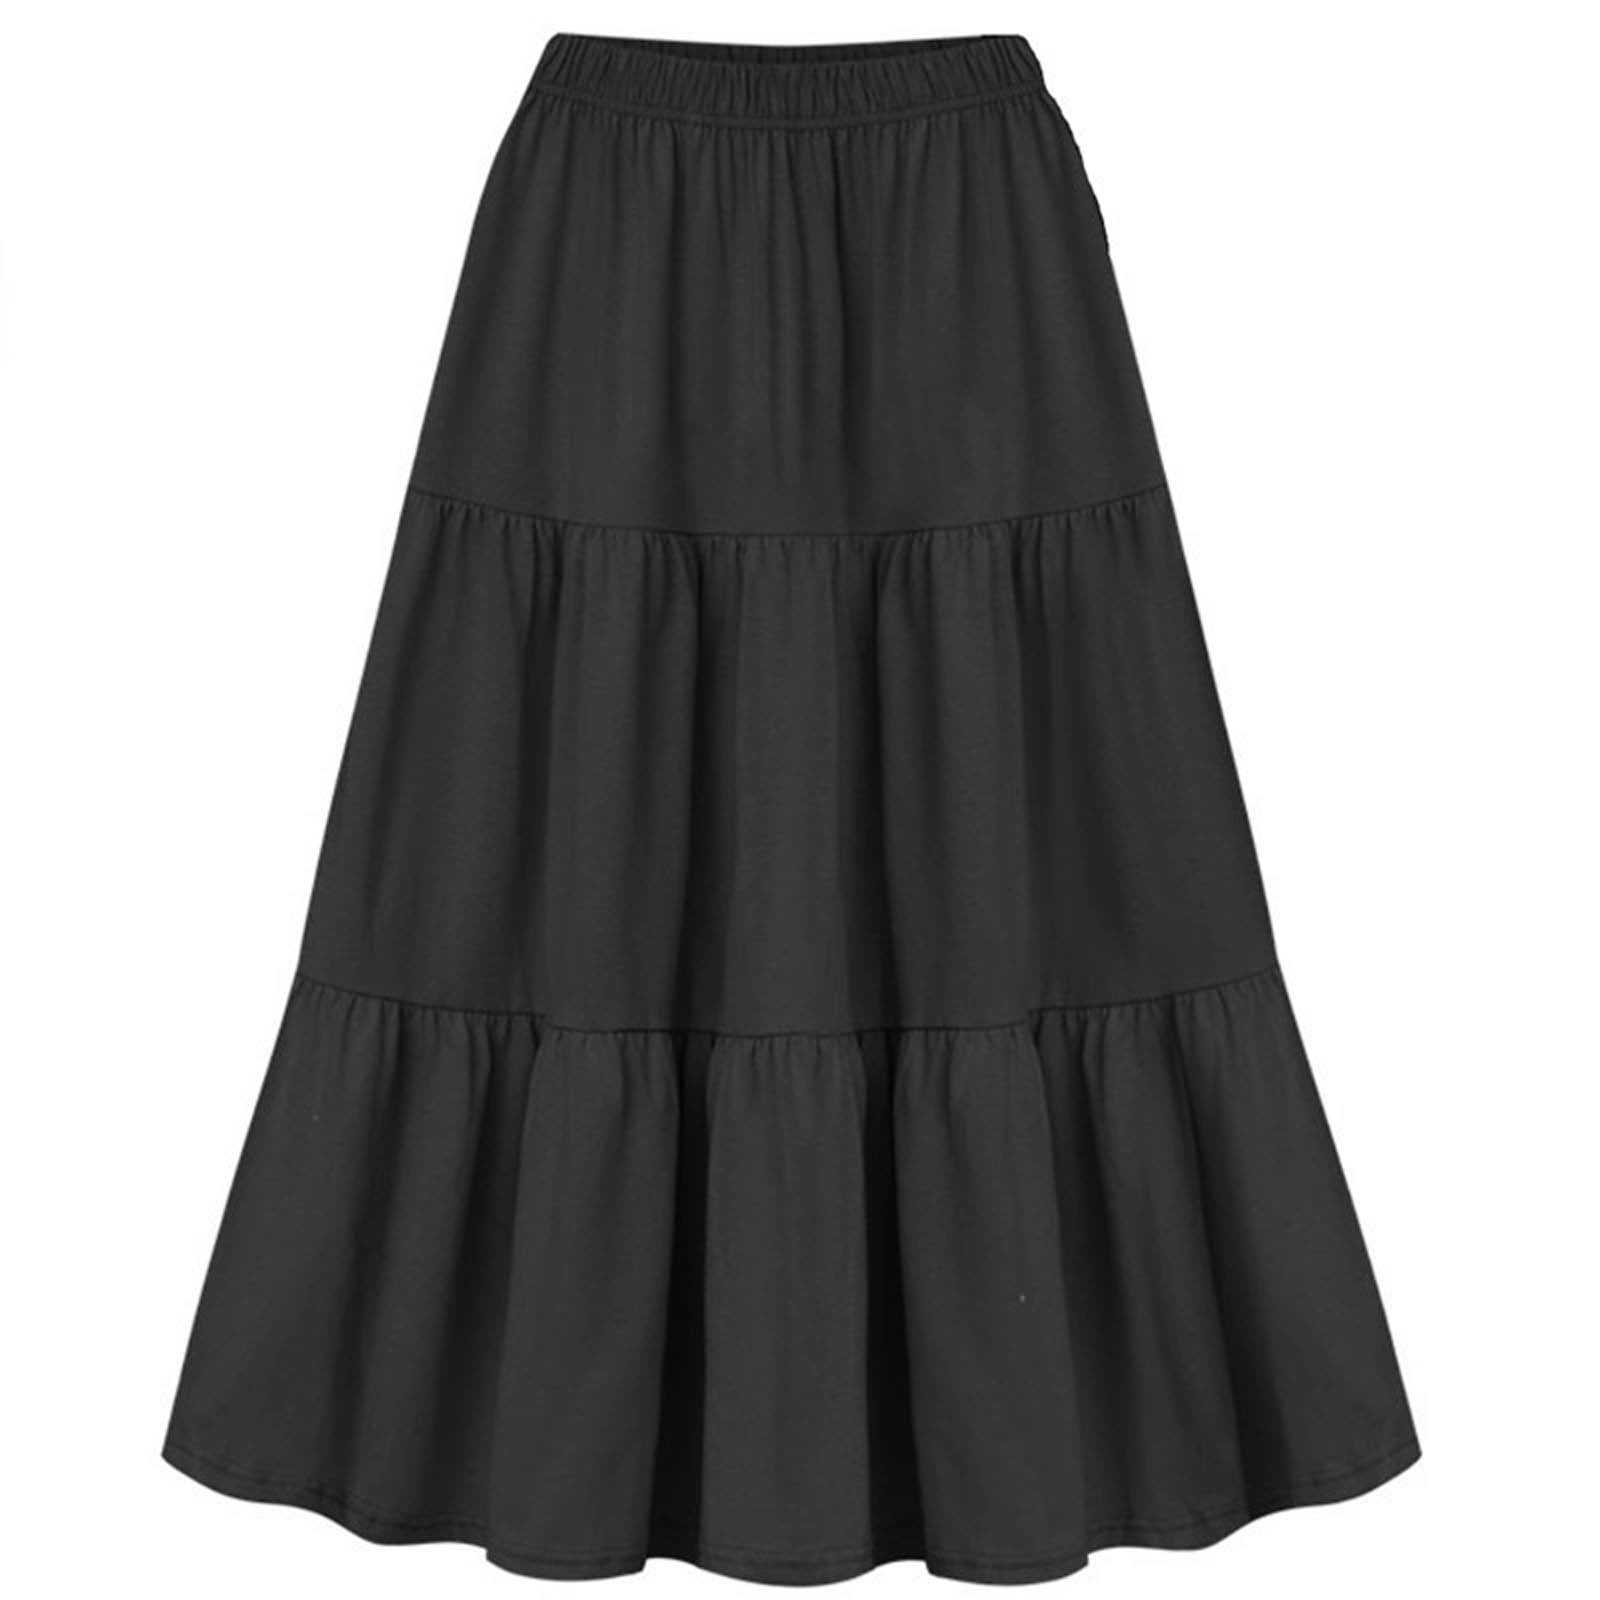 Skirts for Women Trendy Elastic High Waist A Line Pleated Midi Skirts ...